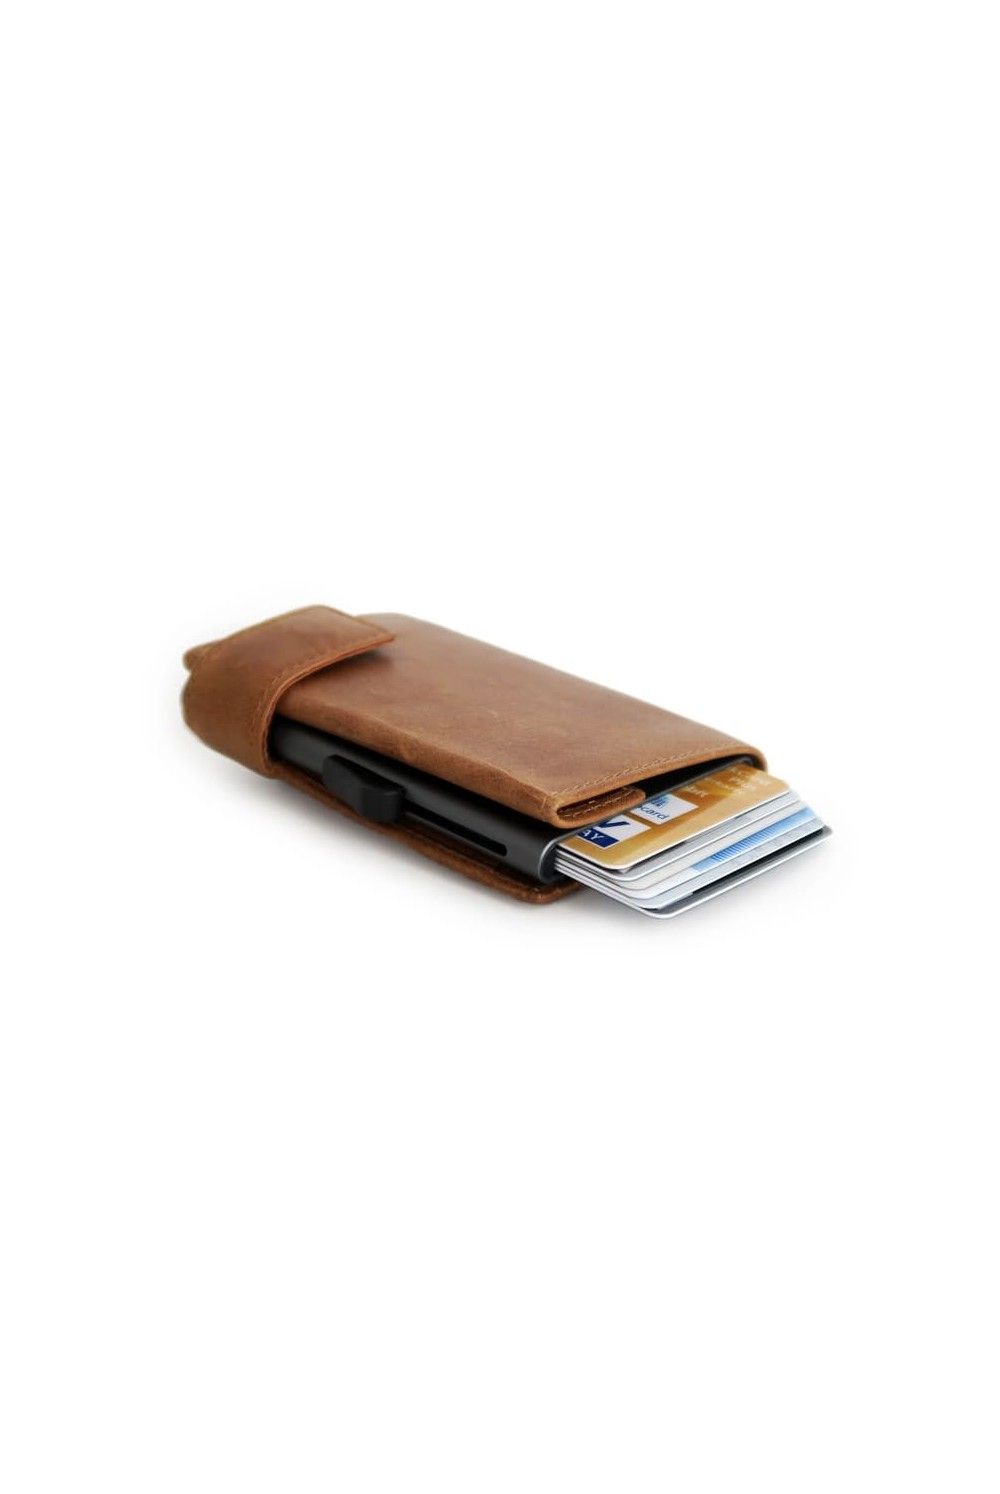 SecWal Card Case XL DK Leather Cognac